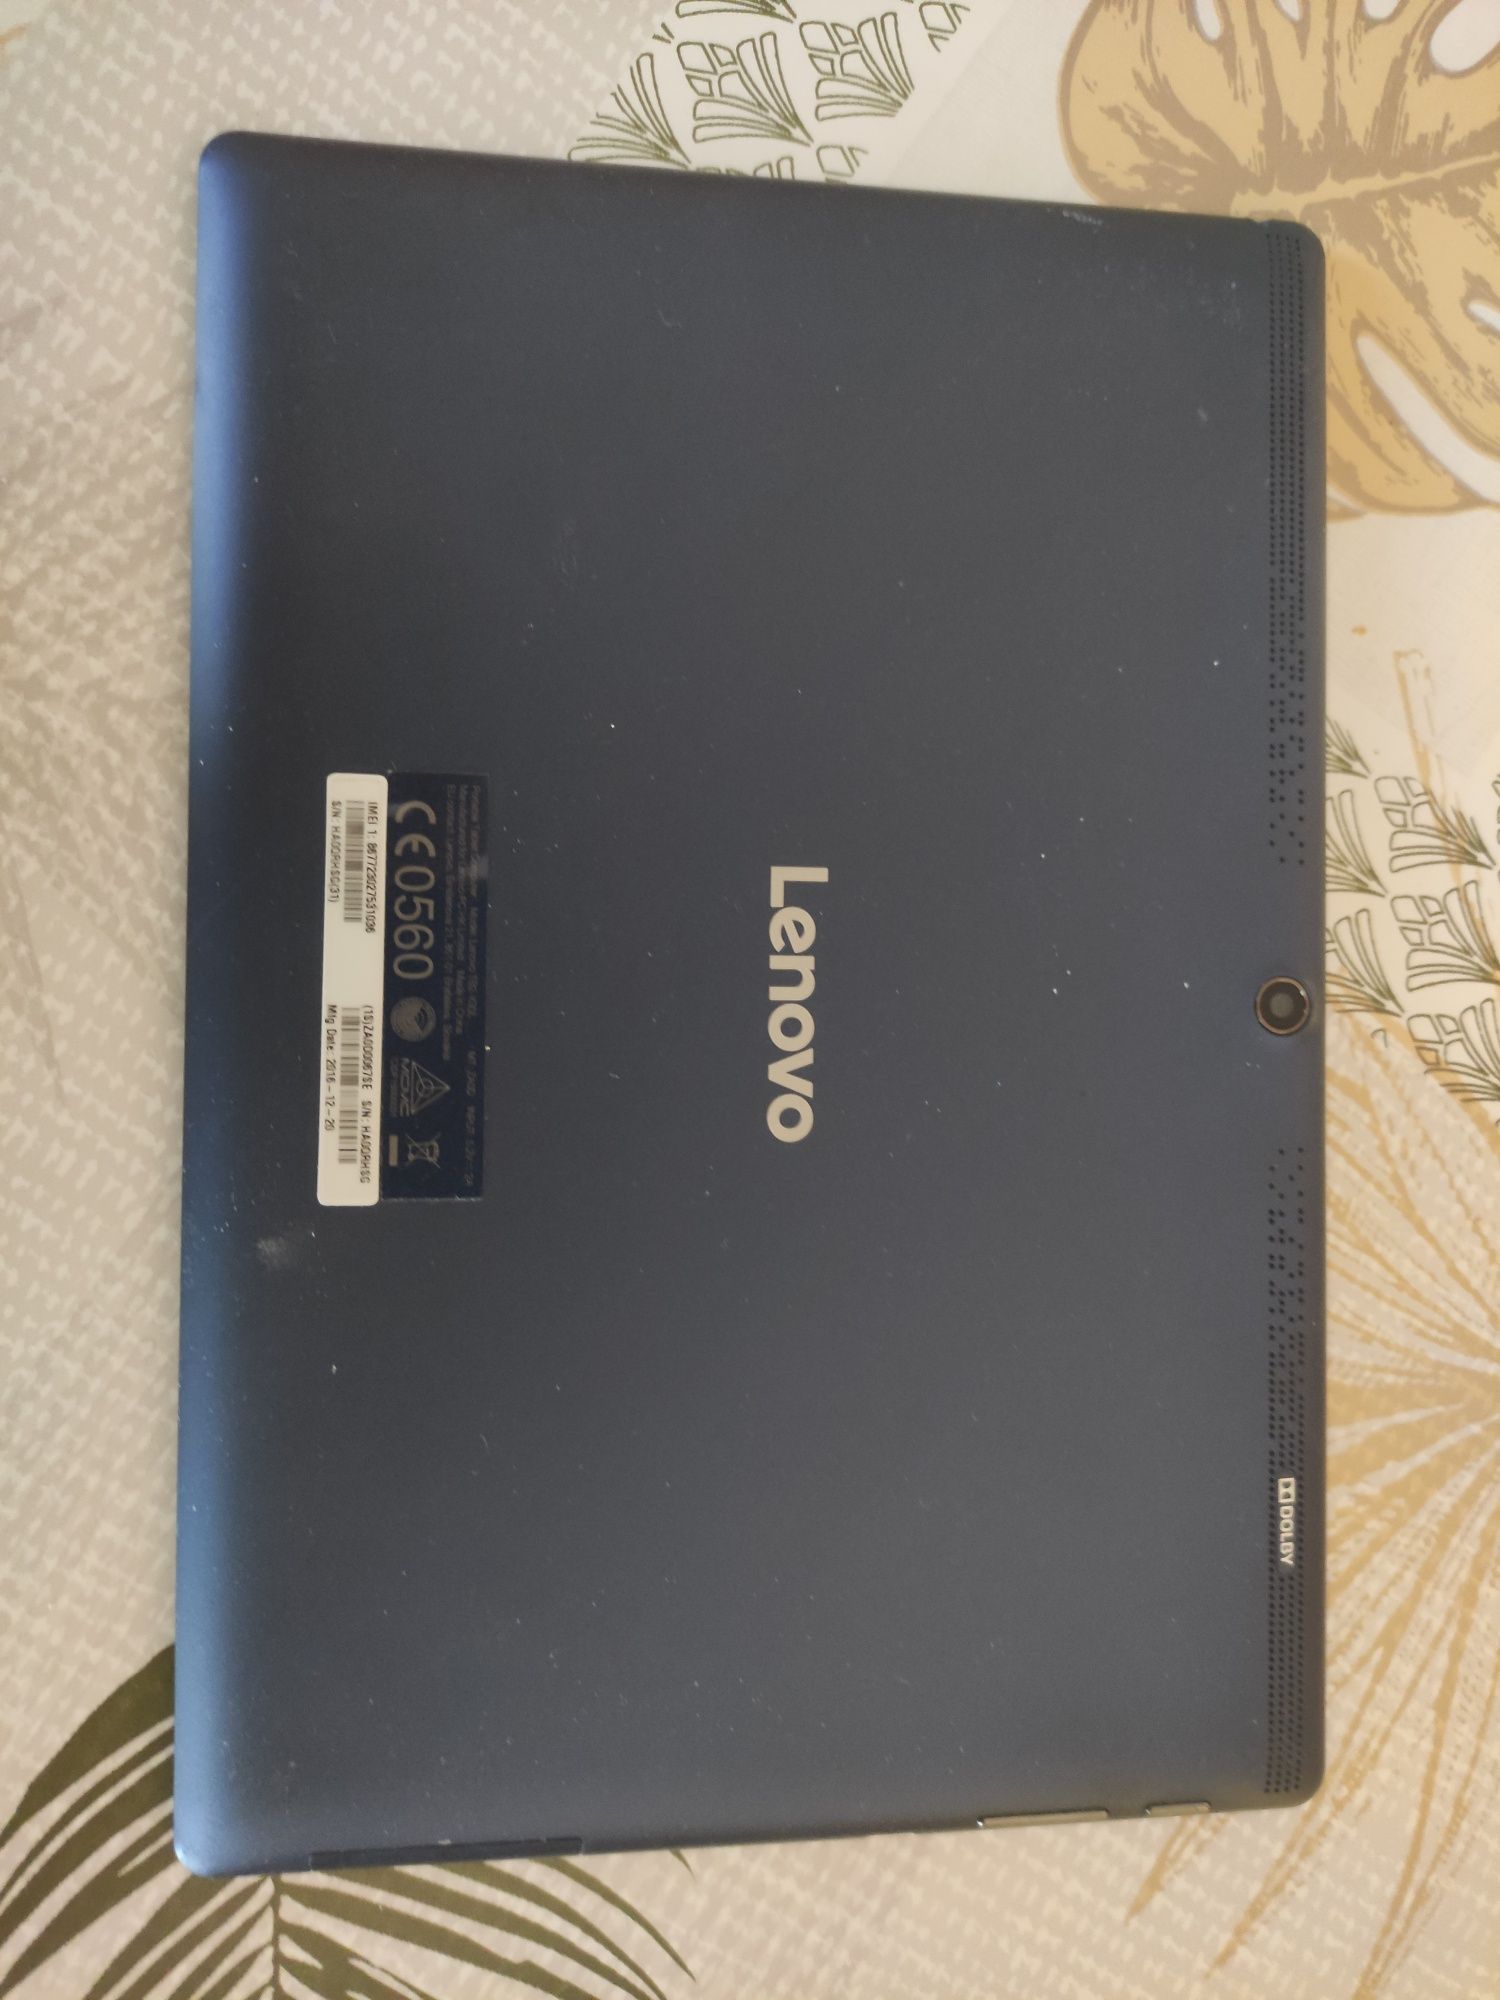 Tablet Lenovo tb2-x30l